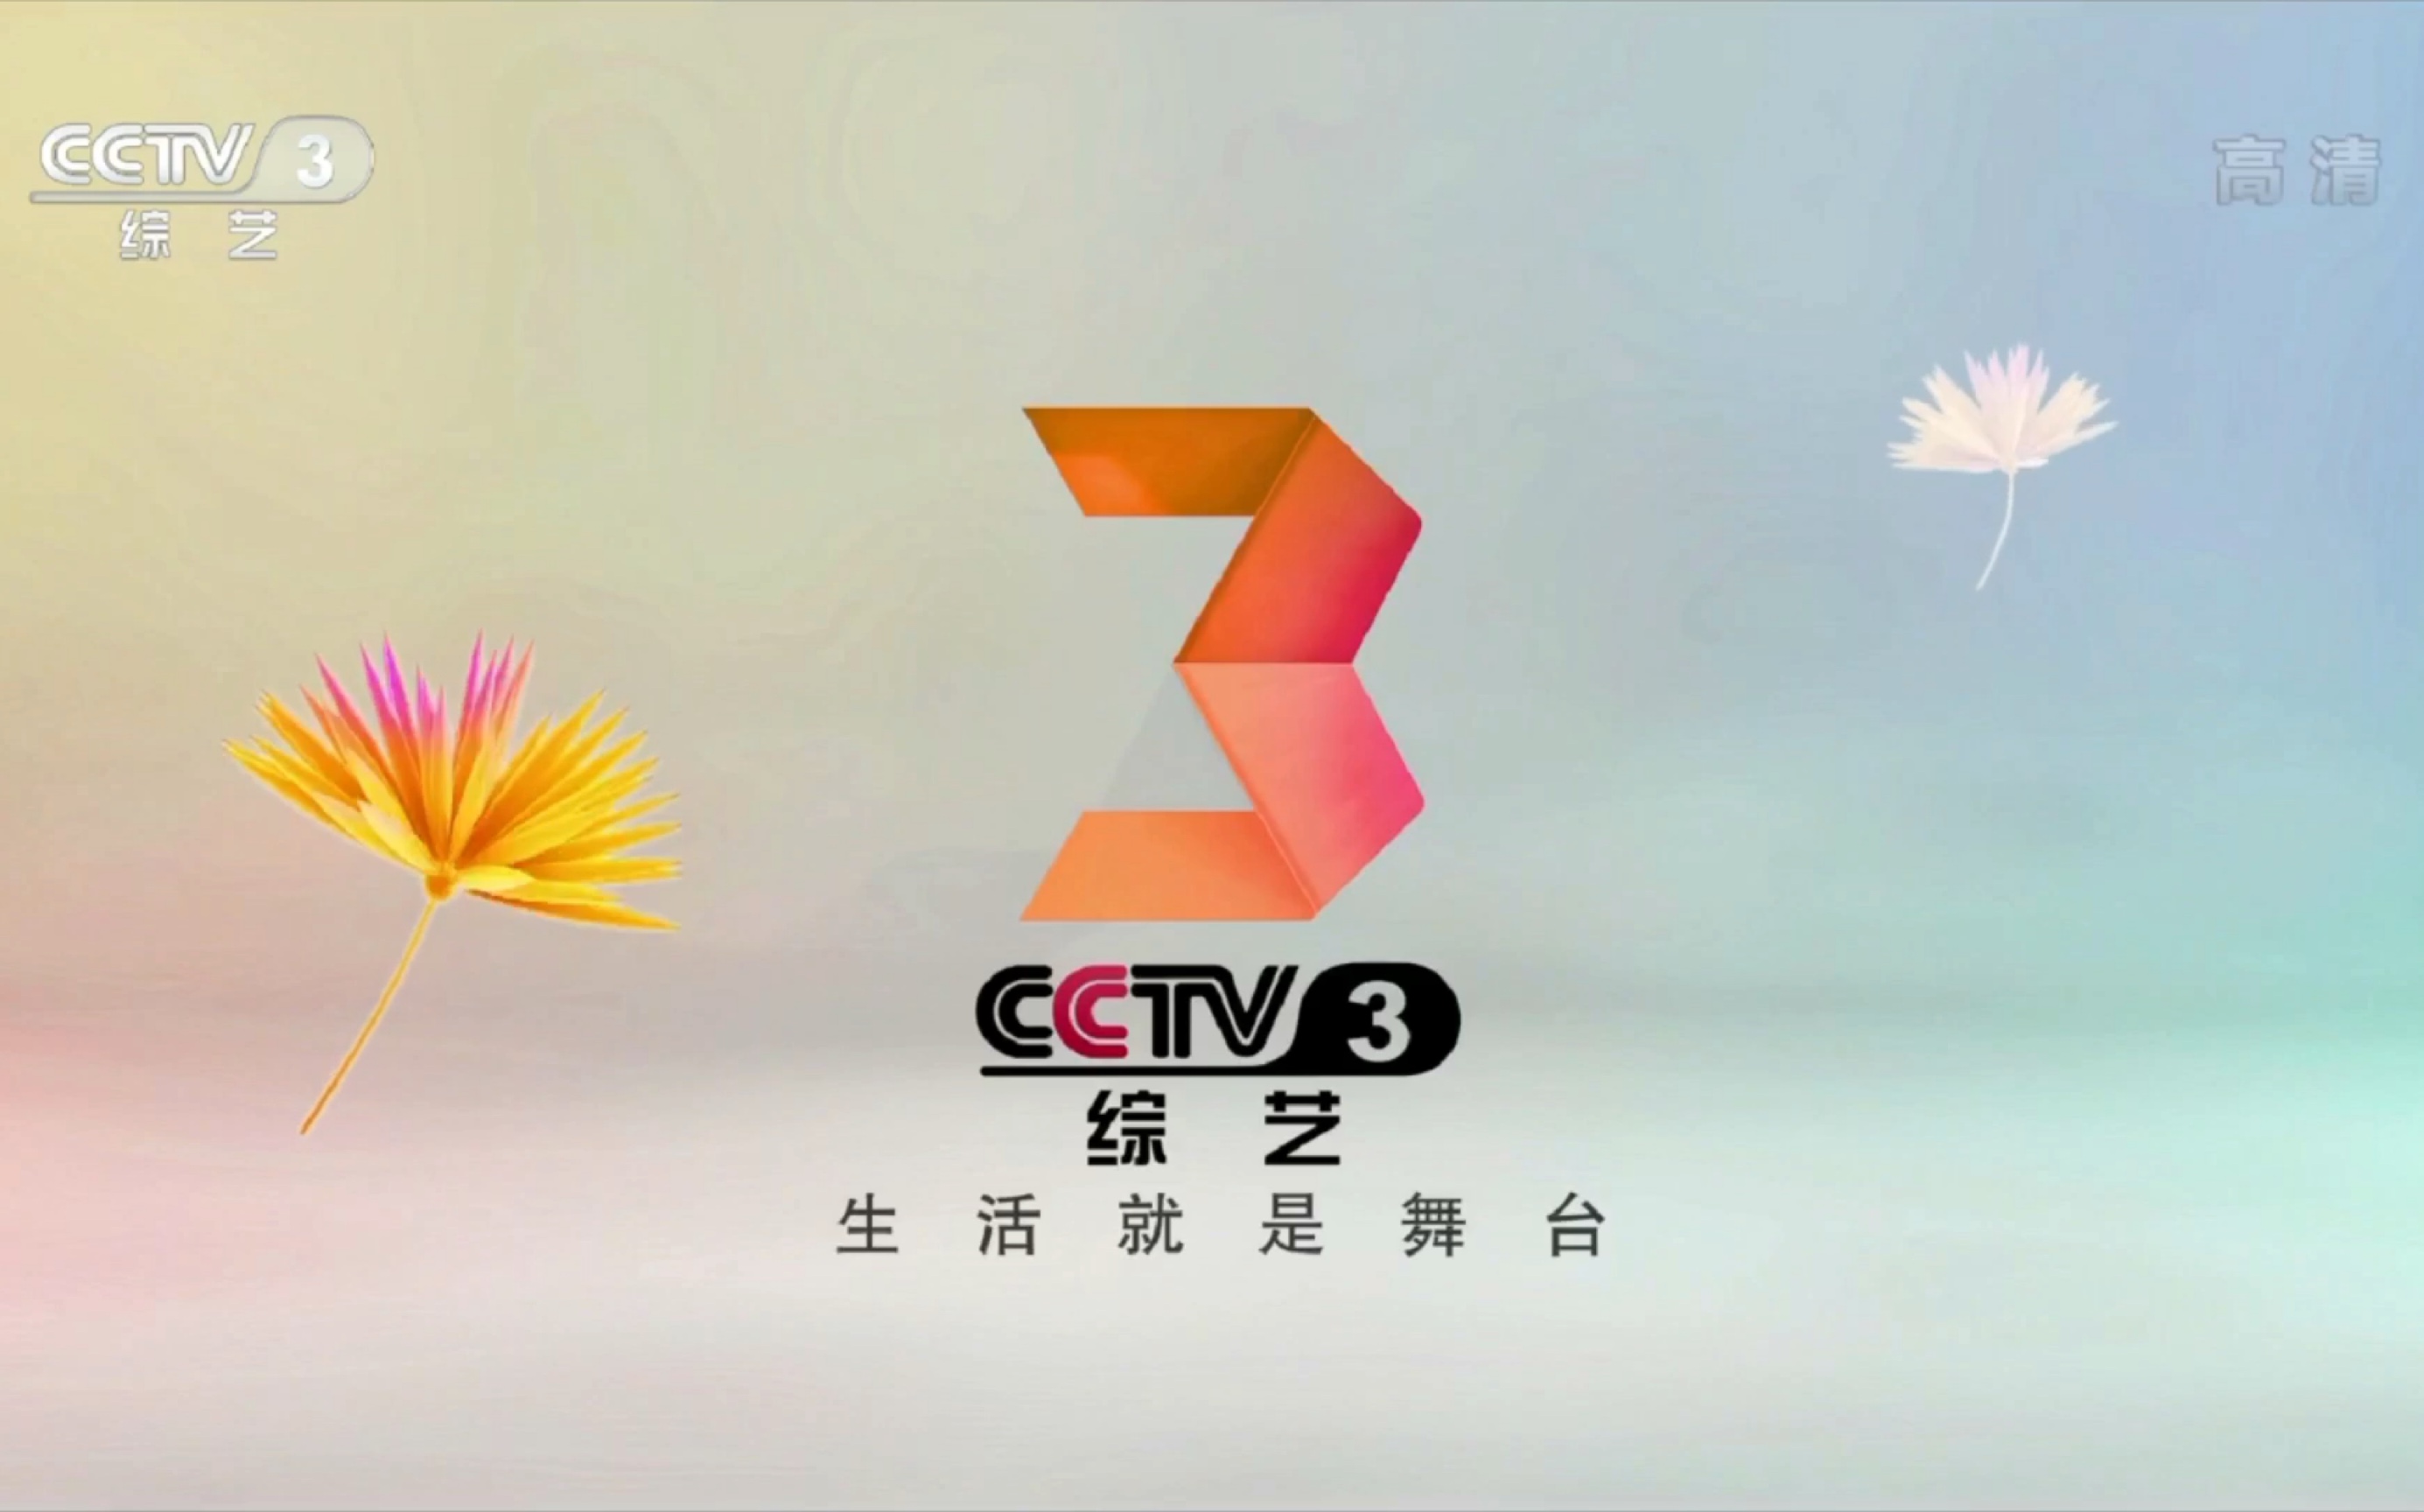 cctv3综艺频道上将许世友下集预告2016id节目预告天天把歌唱片头